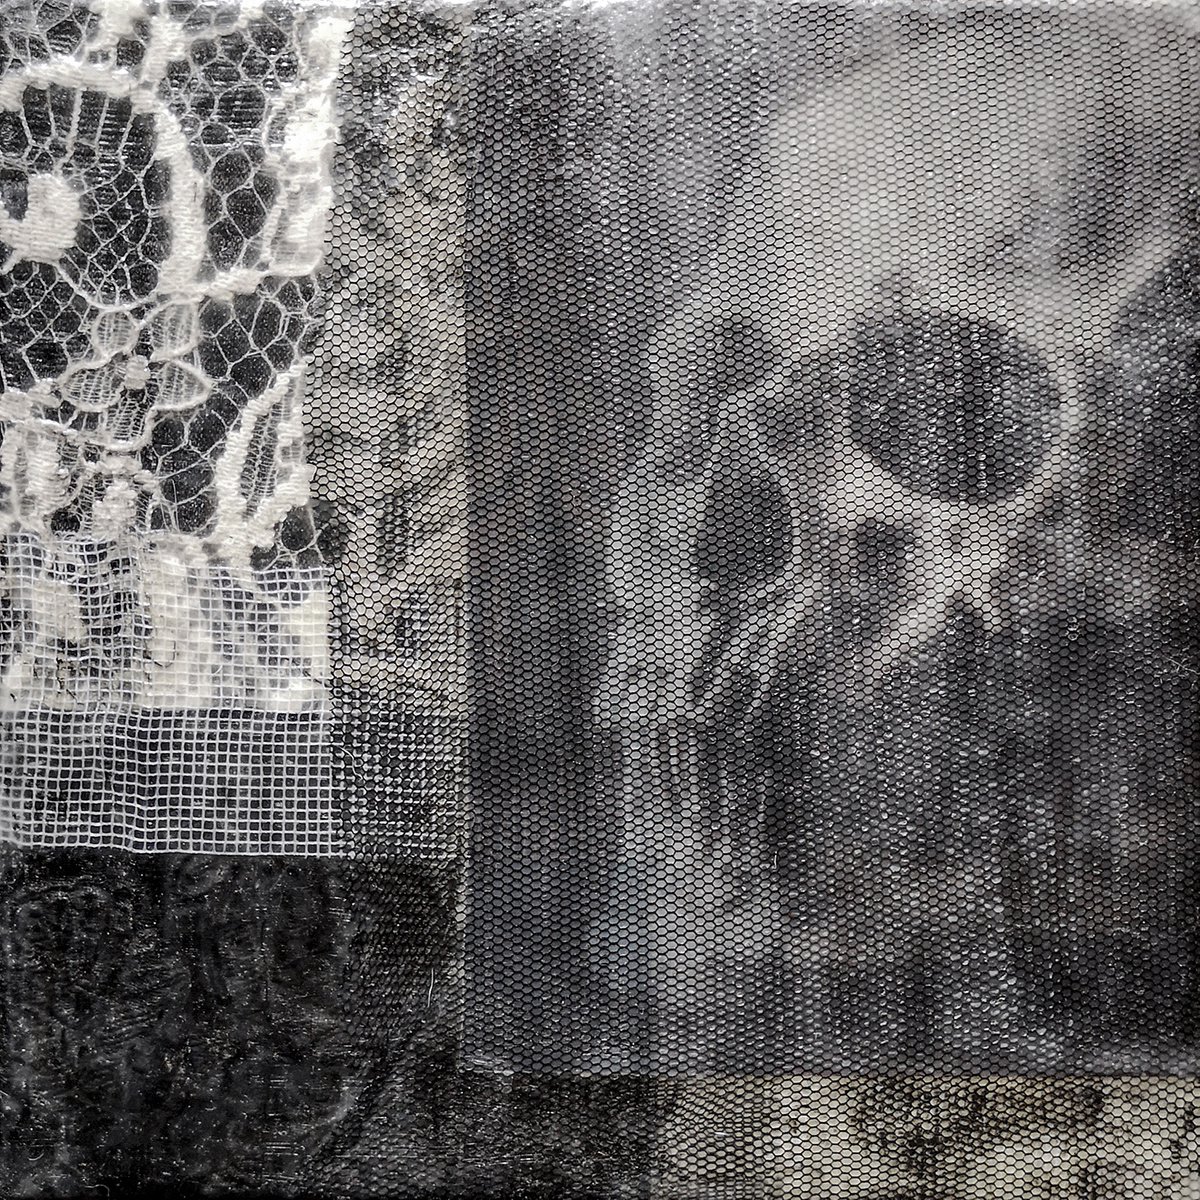 Layered Skull - ORIGINAL 6 x 6 Gothic Collage Art by Roseanne Jones by Roseanne Jones